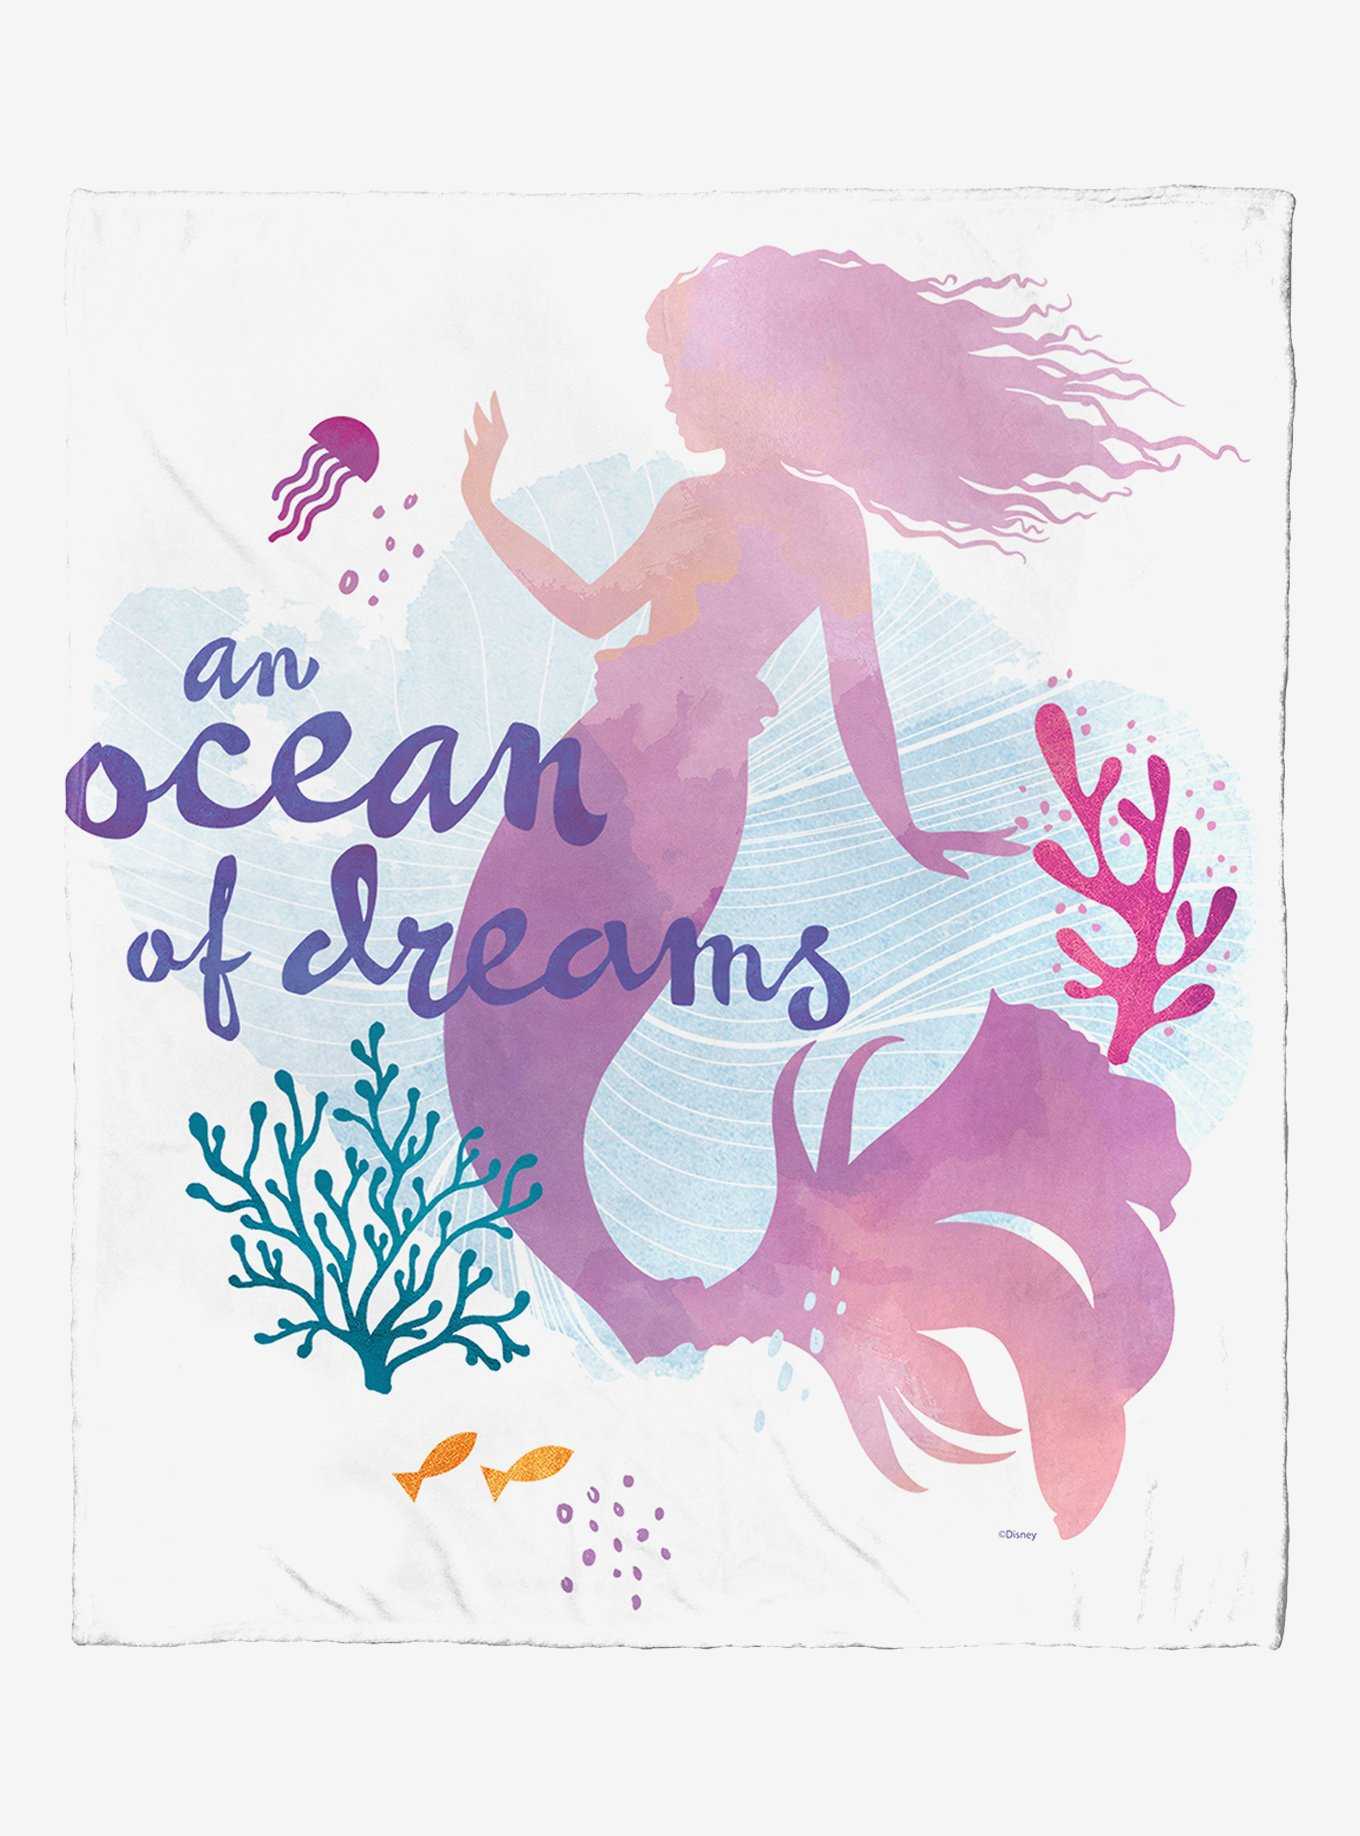 Disney The Little Mermaid Ocean Of Dreams Silk Touch Throw, , hi-res